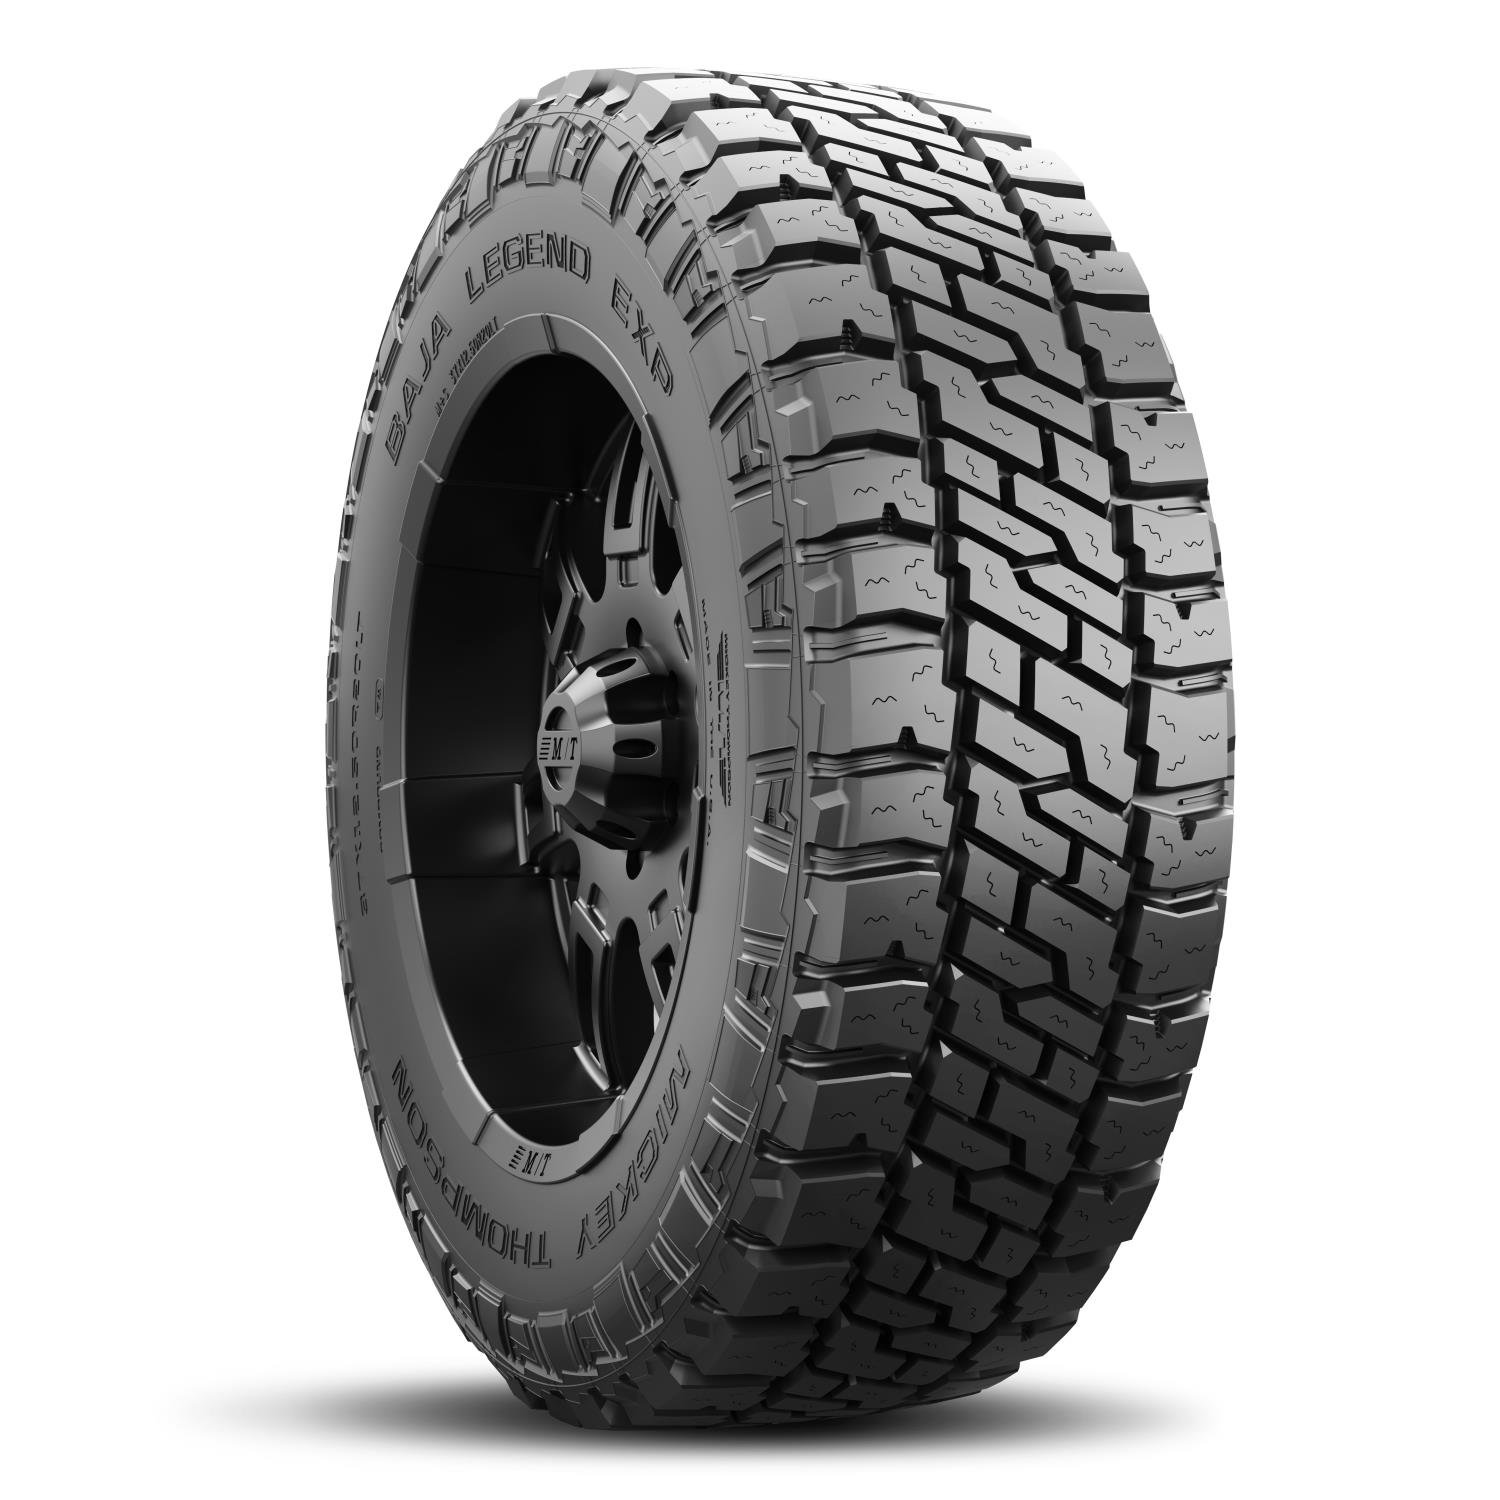 Baja Legend EXP Tire LT285/55R20